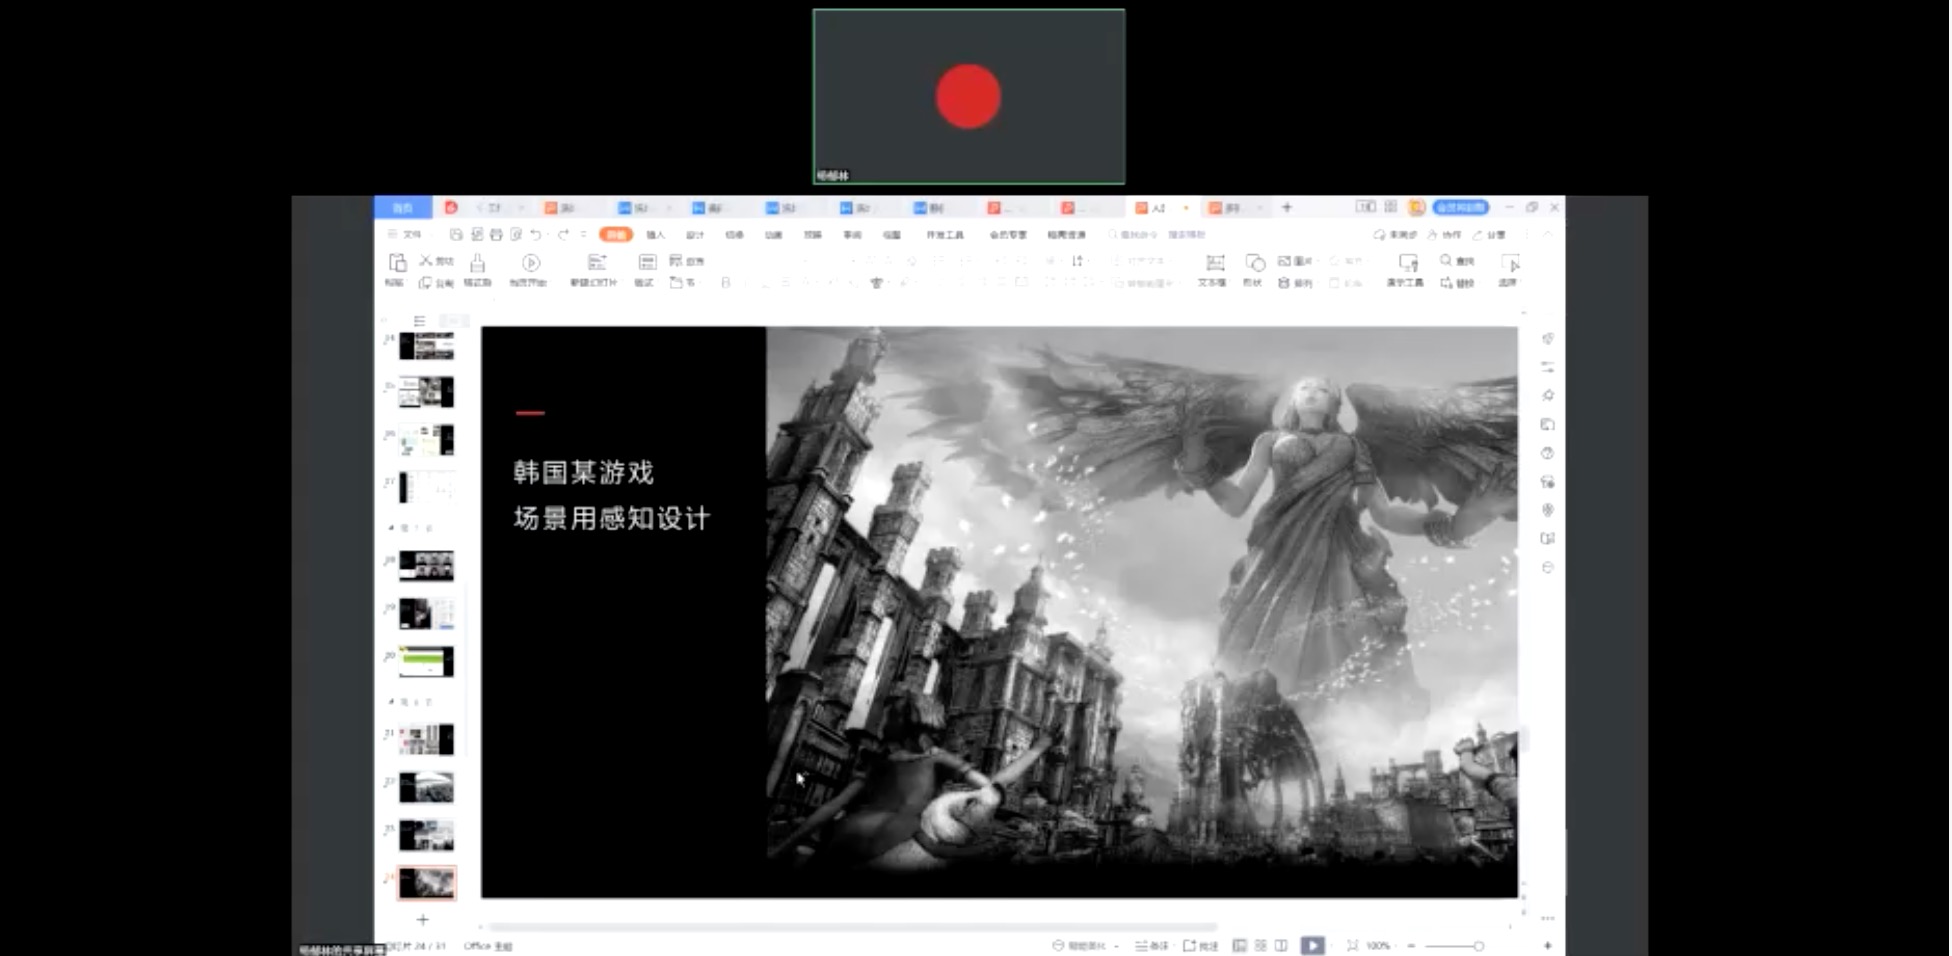 Macintosh HD:Users:wuyezhou:Desktop:cccc.jpeg